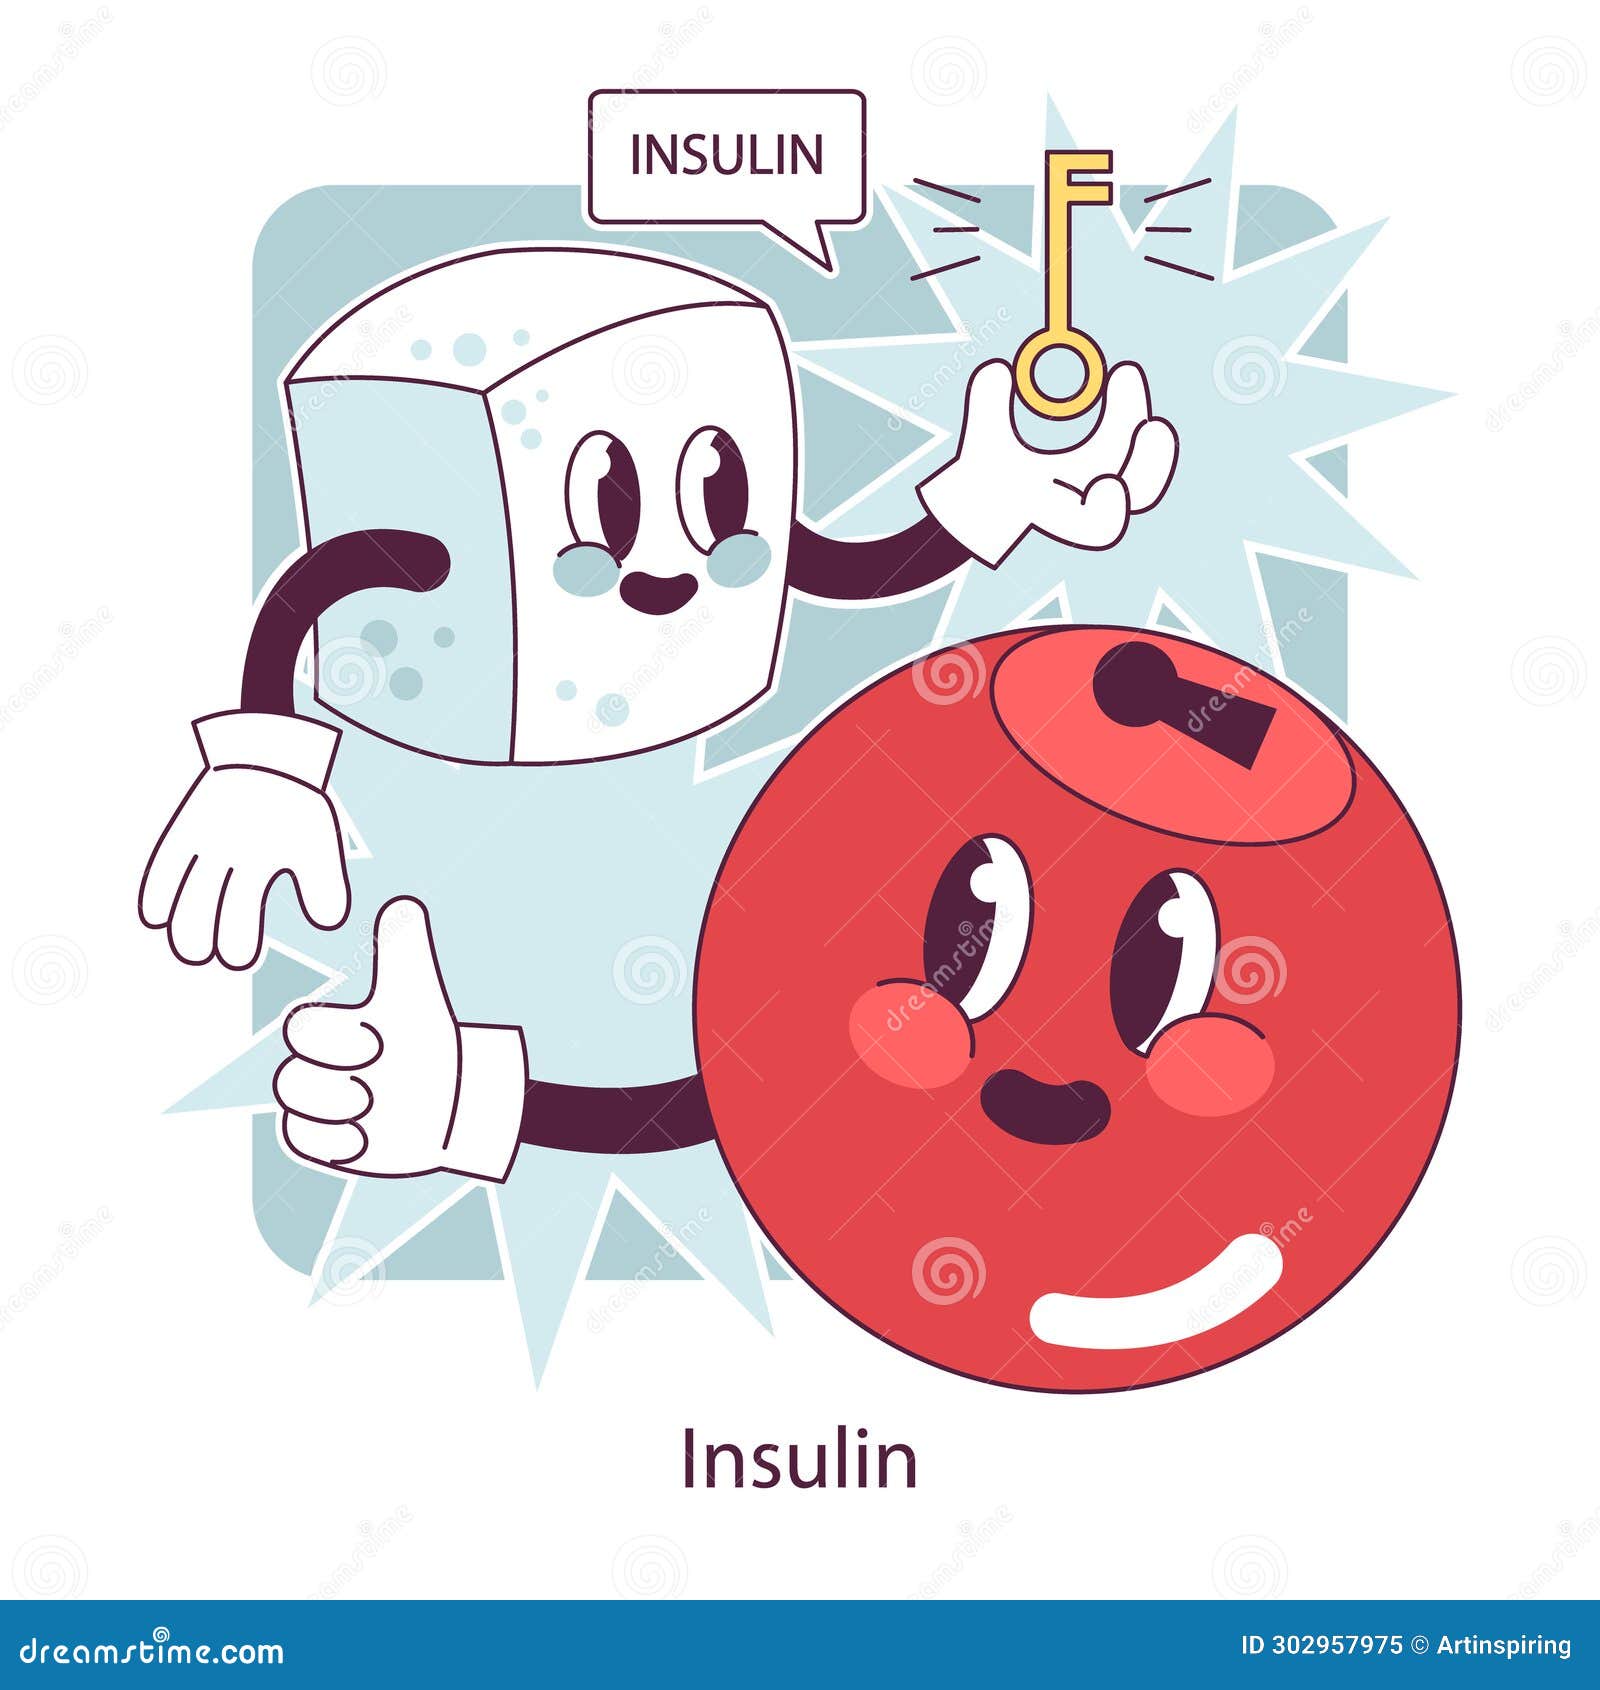 endocrine system. insulin function. pancreas gland hormones secretion